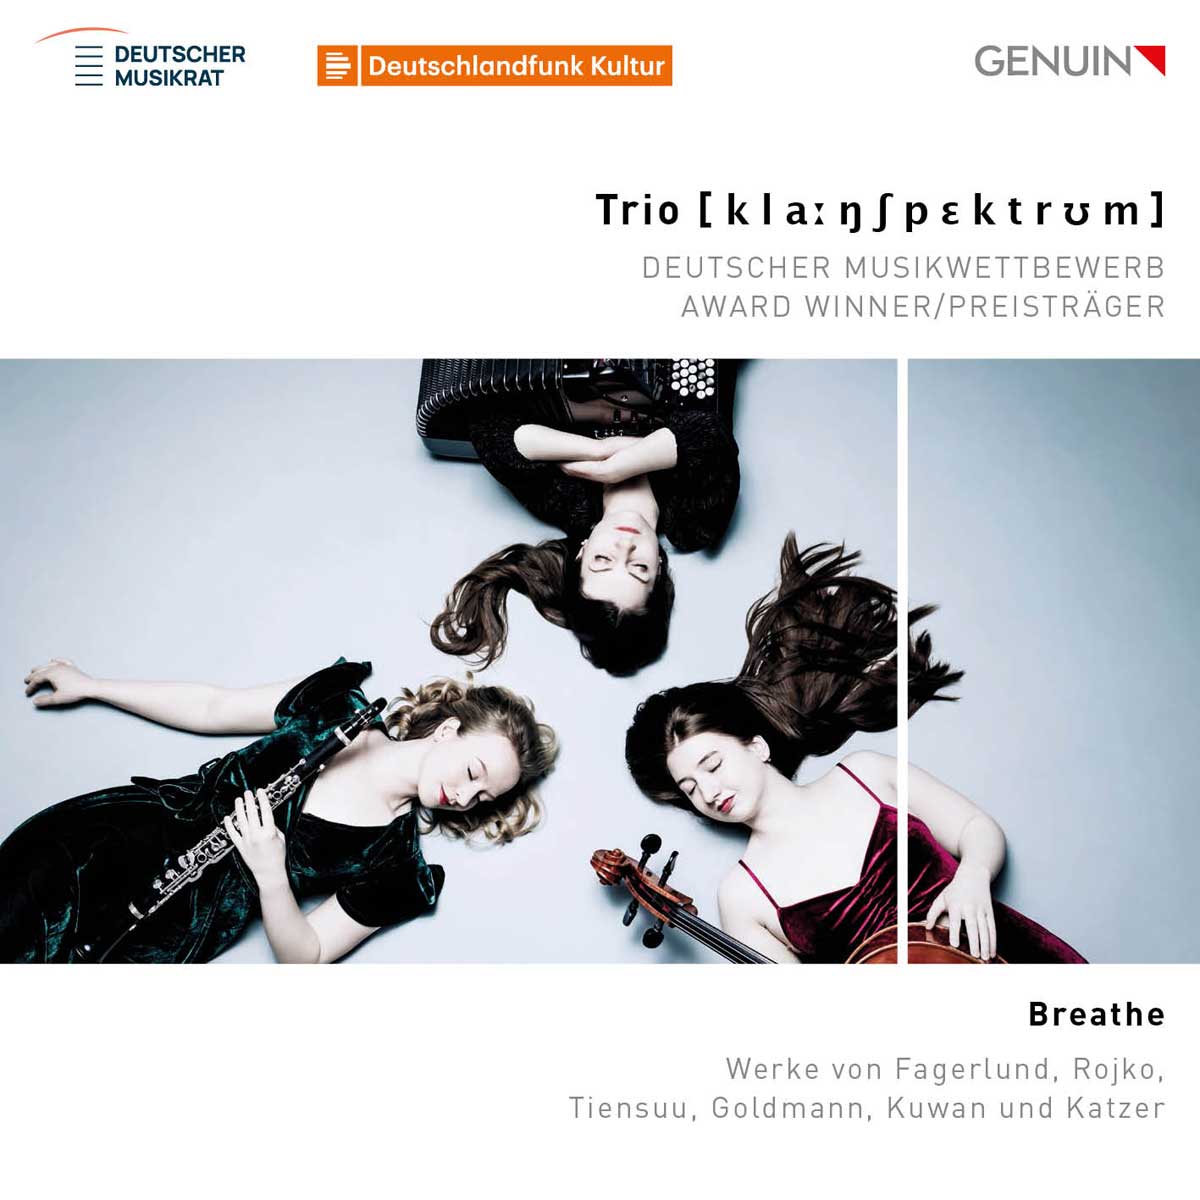 CD album cover 'Breathe' (GEN 22803) with Trio Klangspektrum